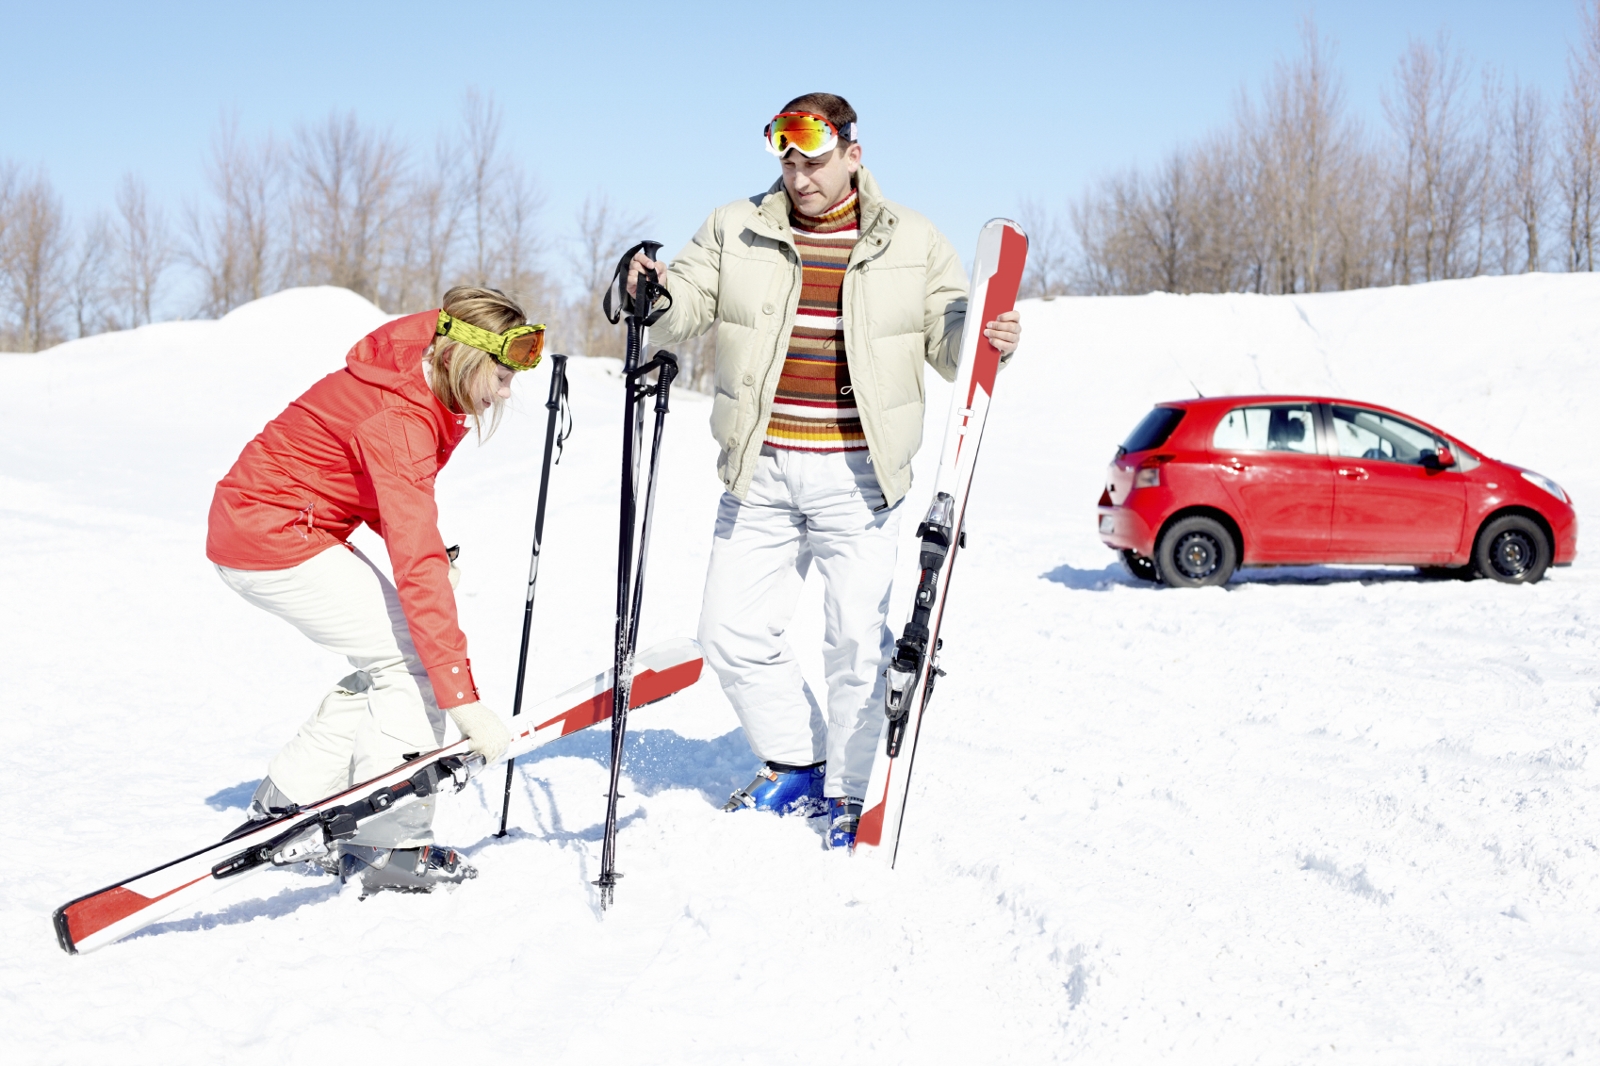 February half-term skiing